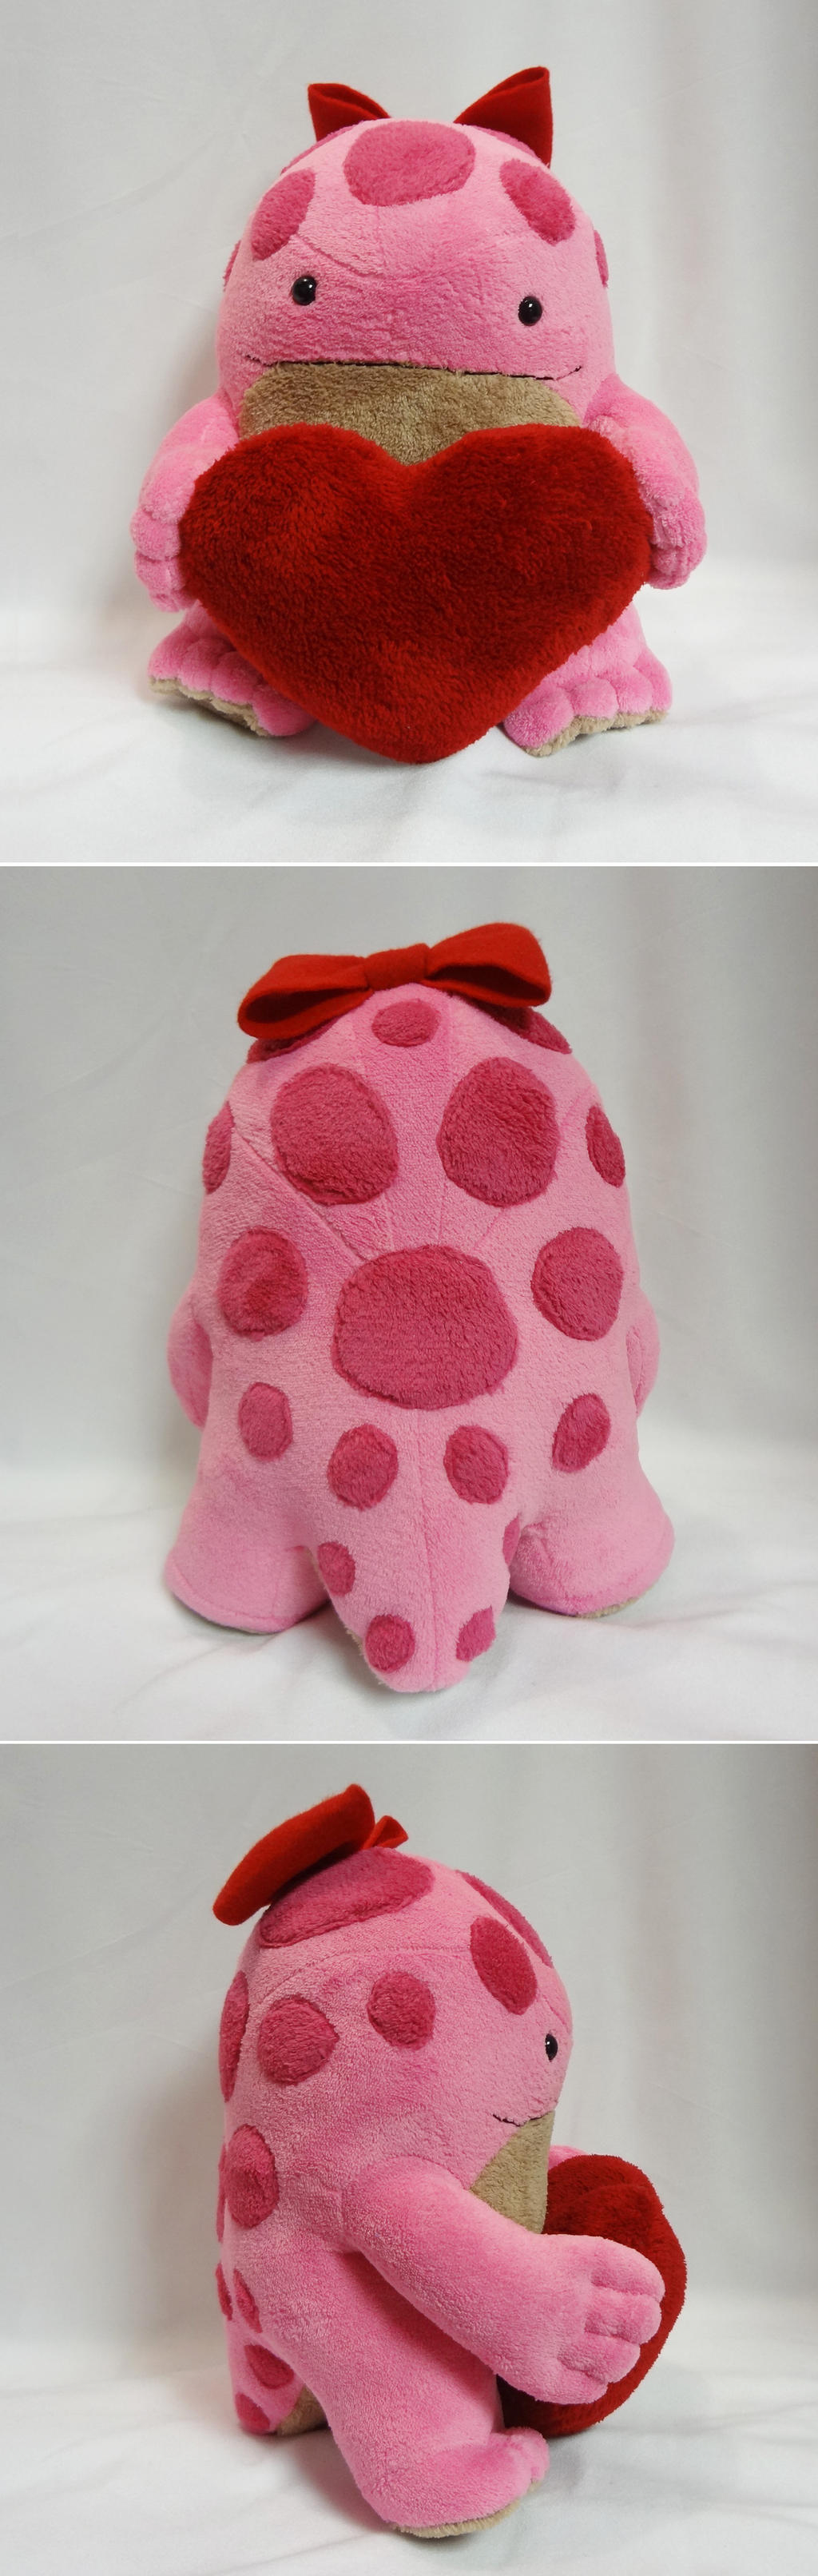 Pink quaggan plush with heart